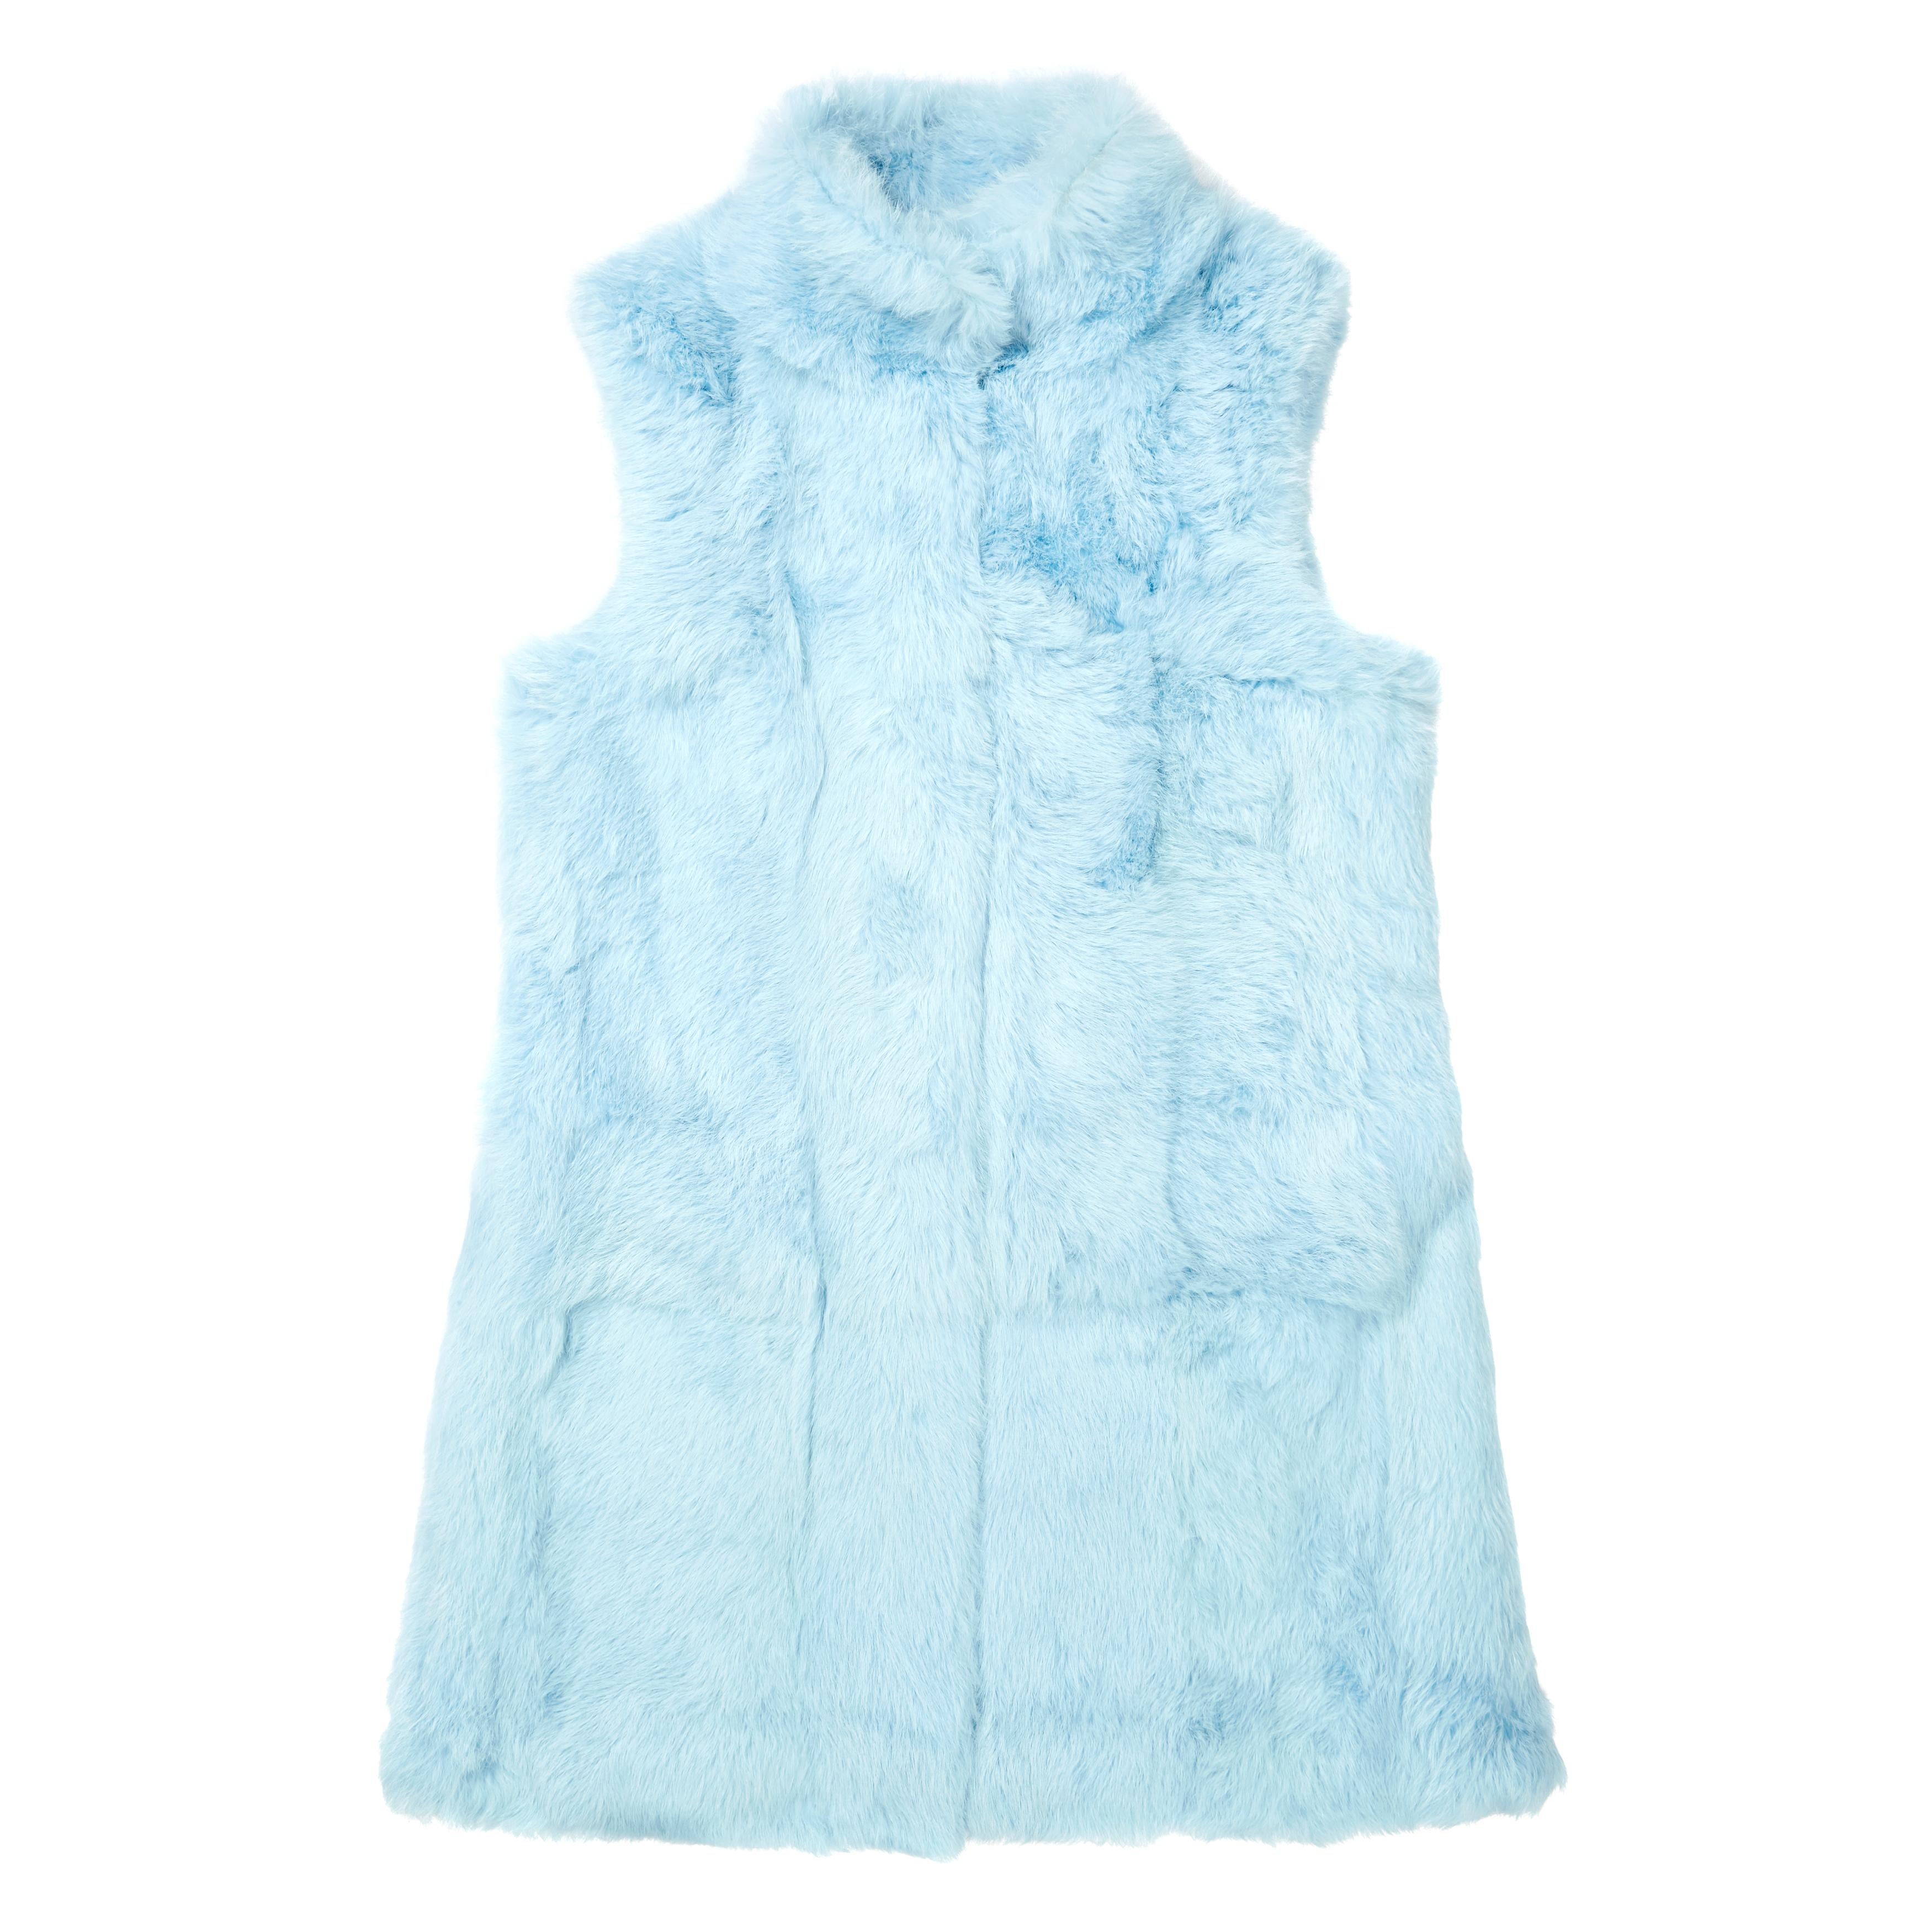 Women's Verheyen London Nehru Gilet in Rabbit Fur in Iced Blue Topaz - Size UK 8-12 For Sale